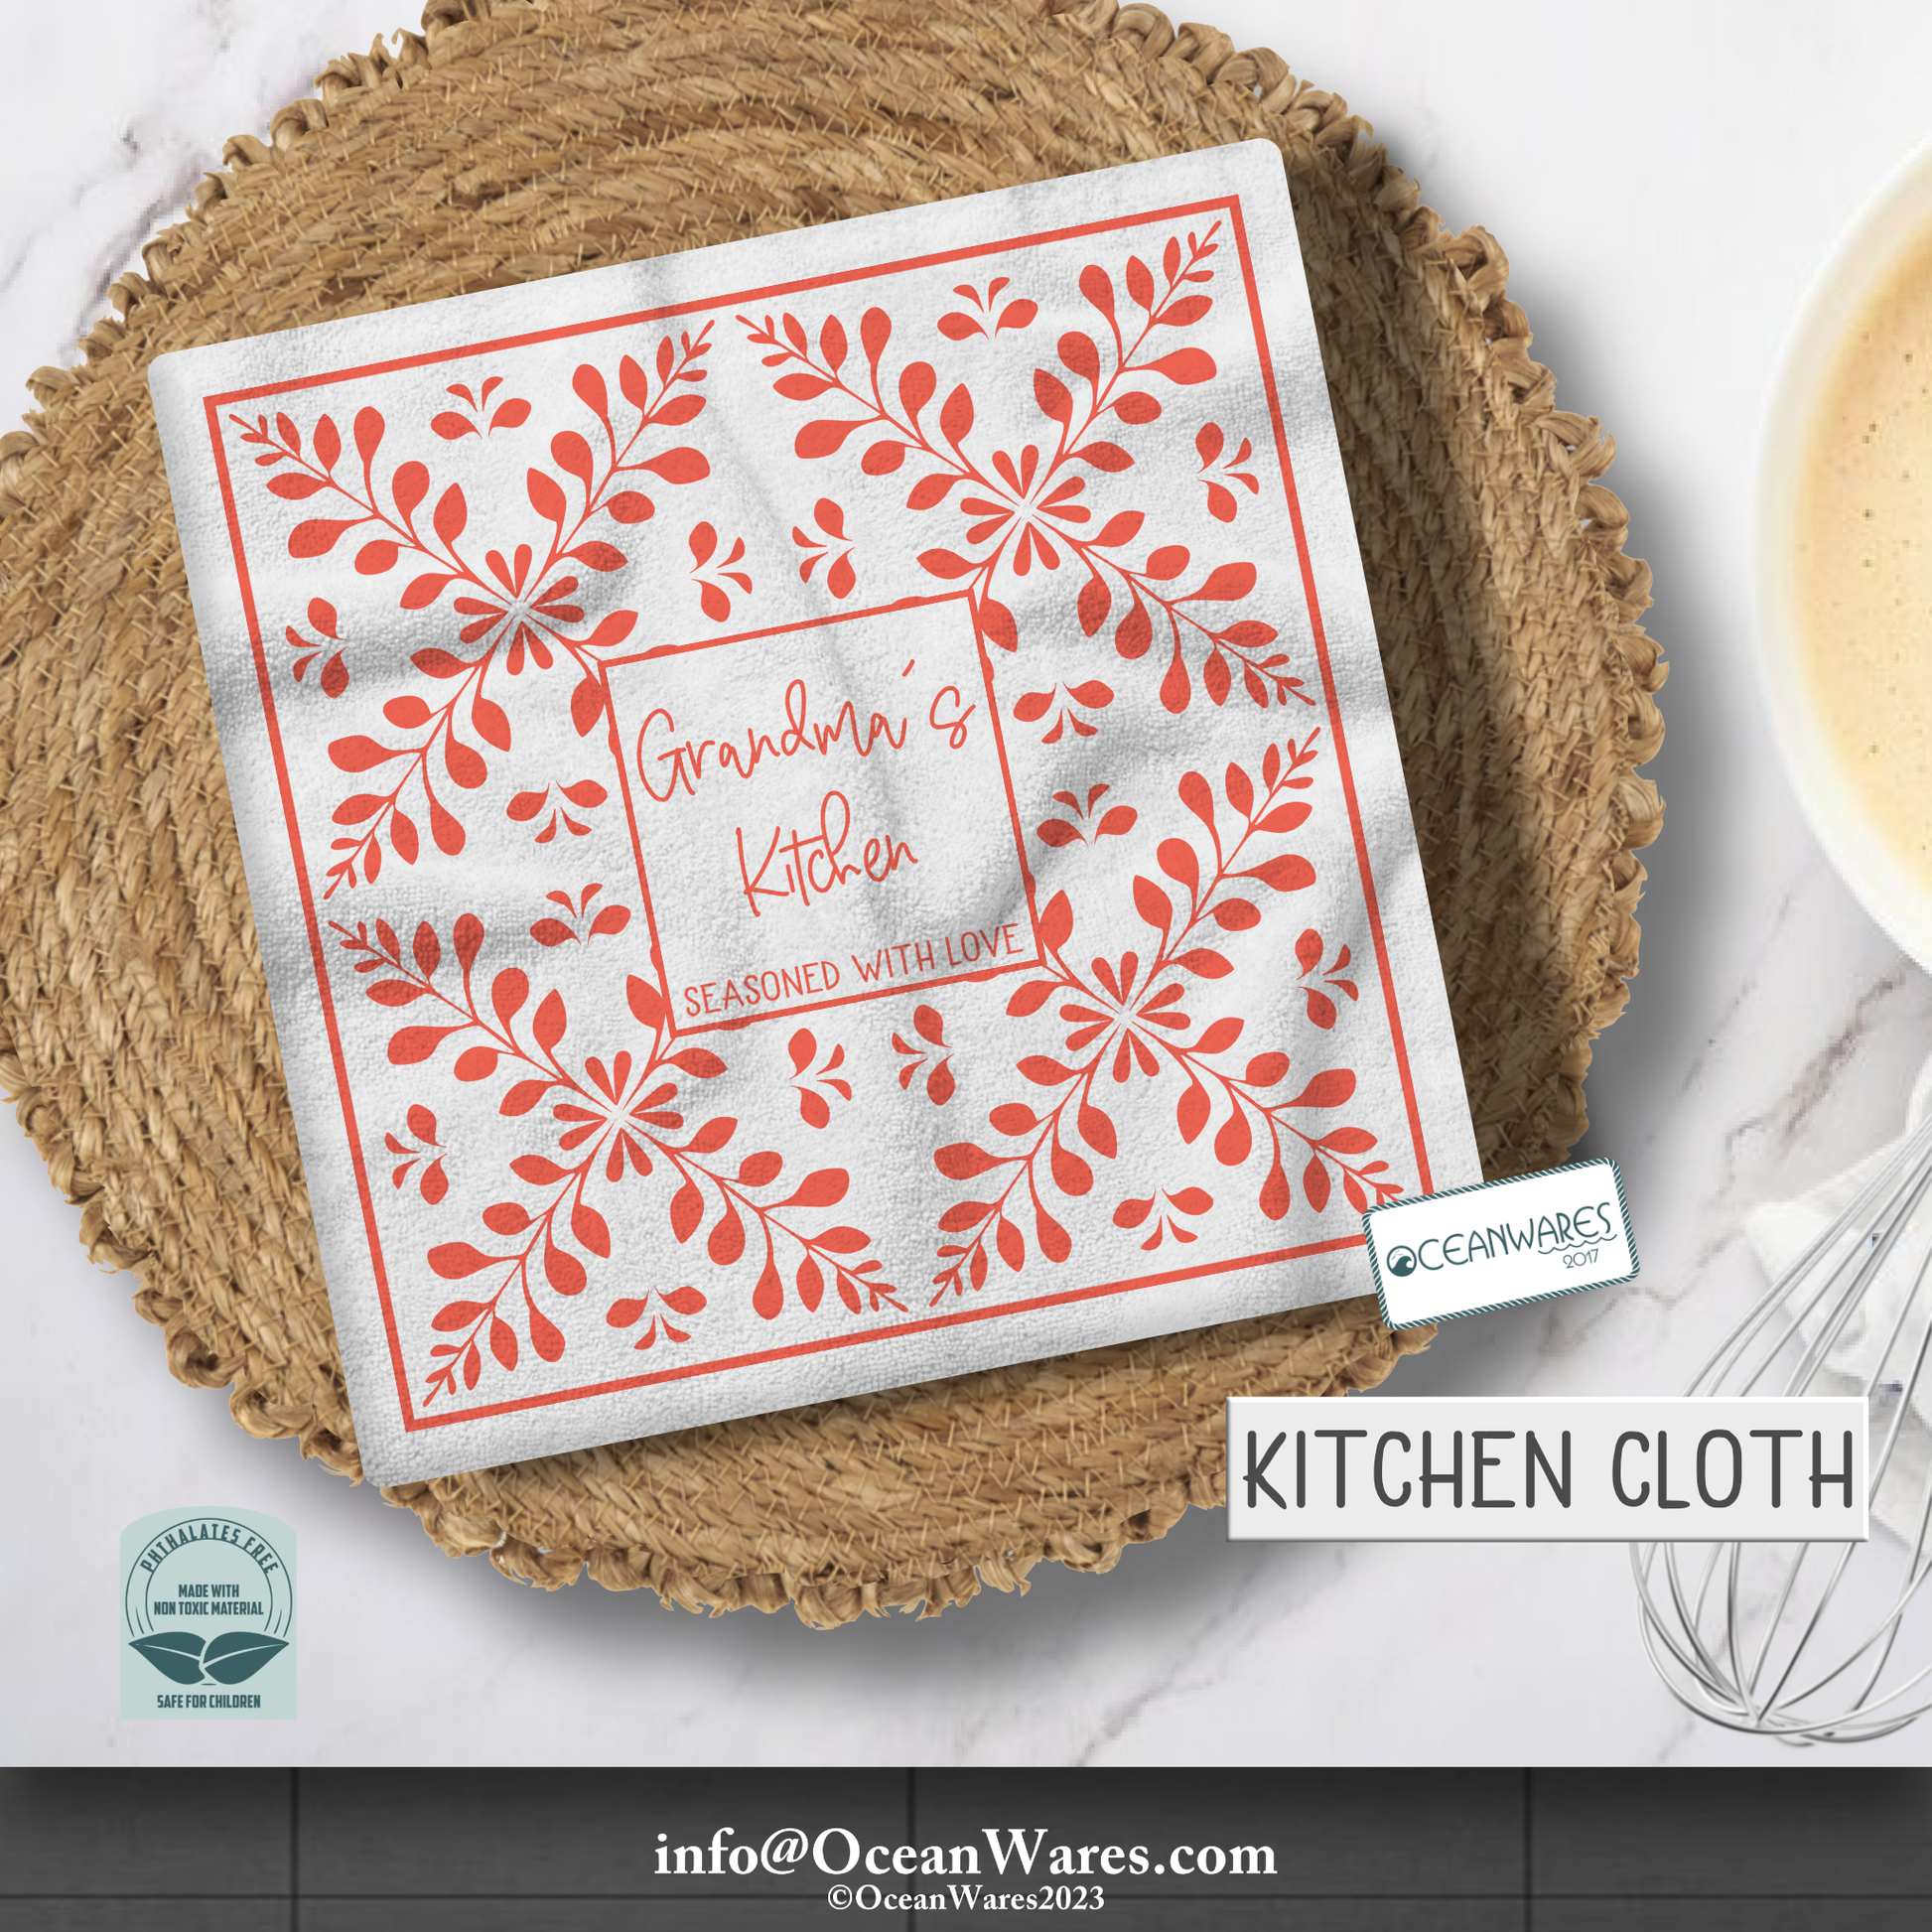 Grandma's Kitchen, Seasoned with Love - Kitchen Cloth - Fun and Eco-Friendly Design.